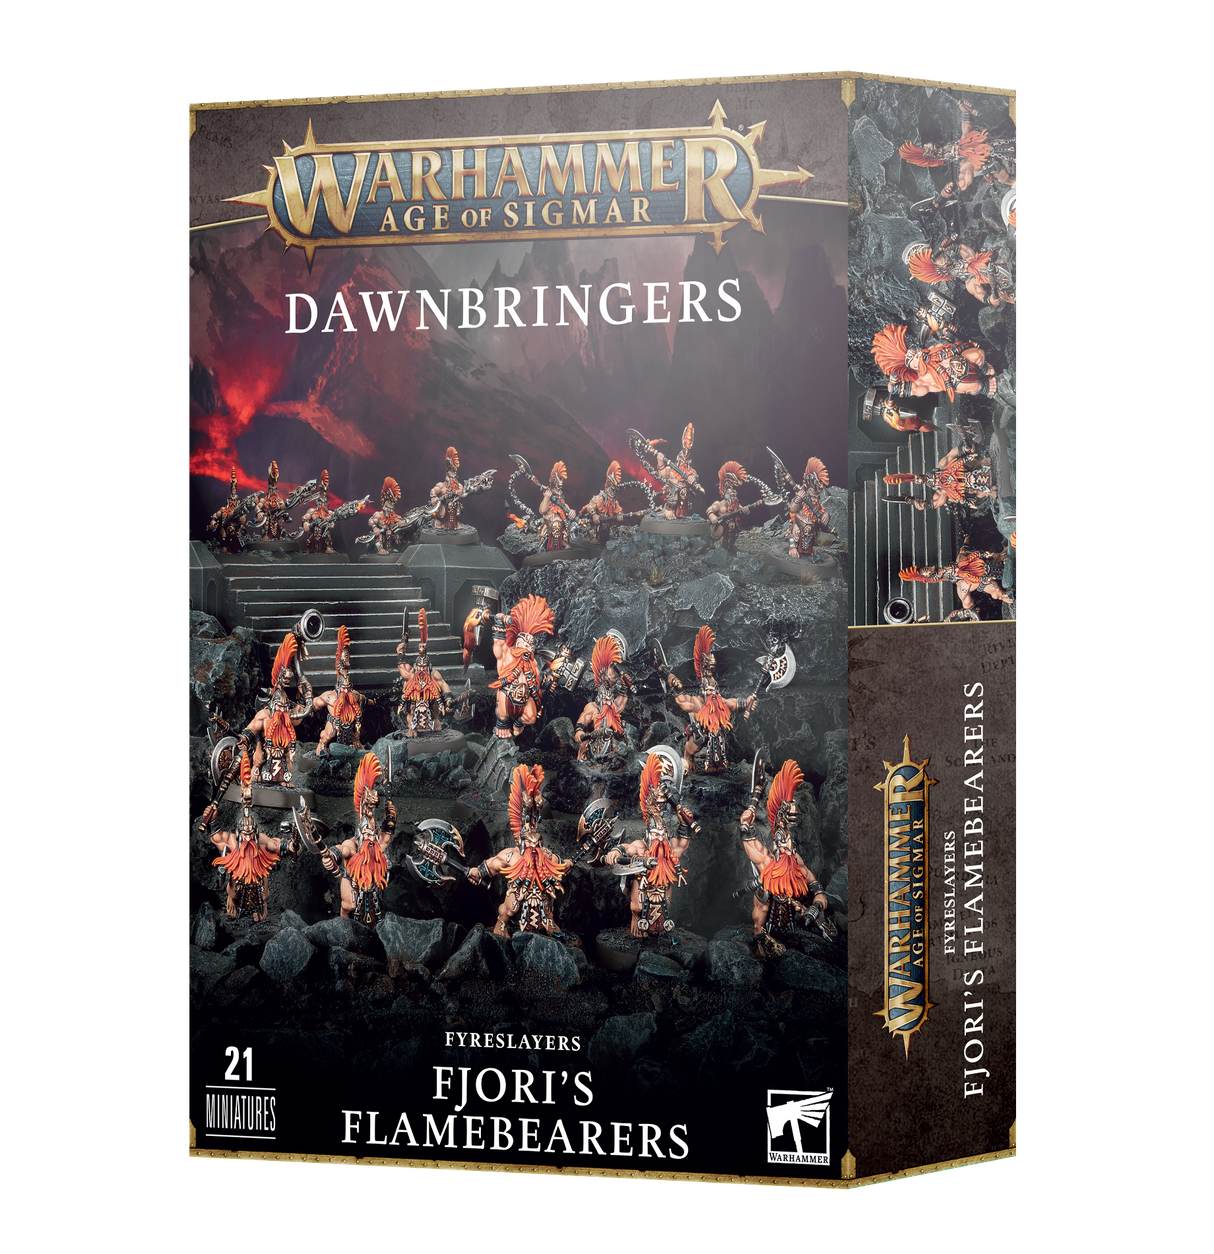 Warhammer Age of Sigmar: Dawnbringers: Fyreslayers - Fjori's Flamebearers